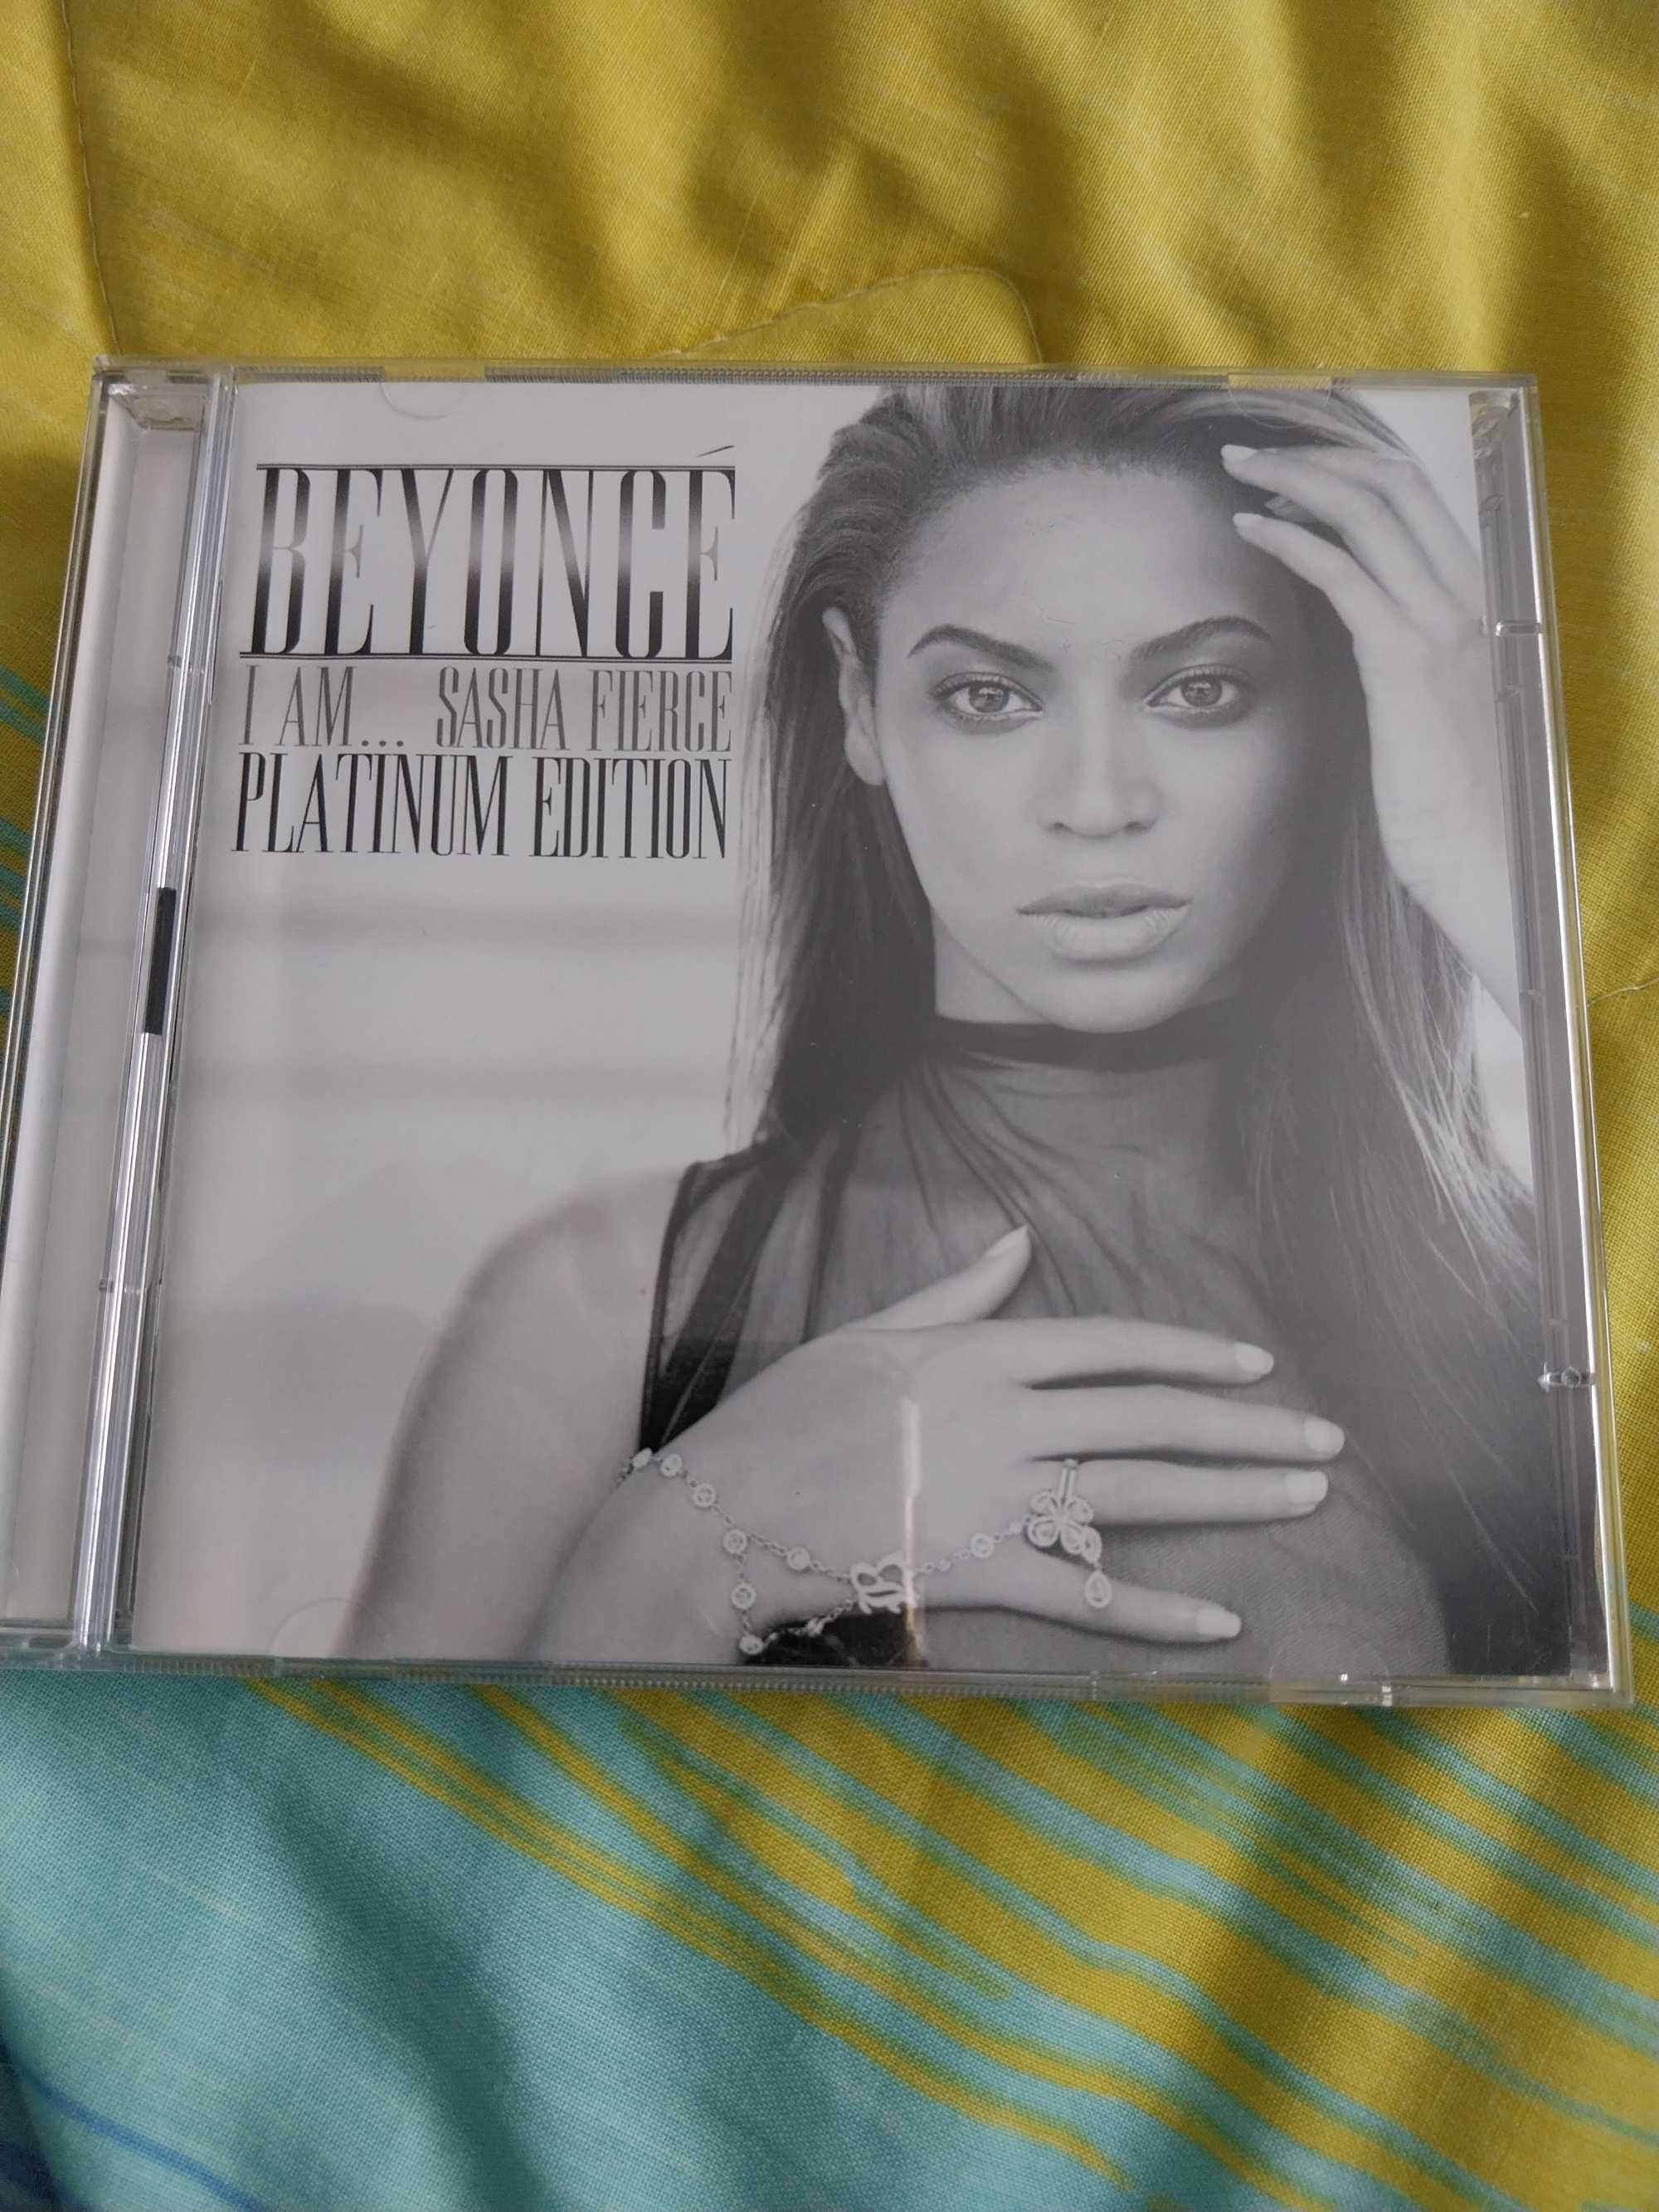 Beyoncé “I Am Sasha Fierce” Platinium Edition (CD + DVD)